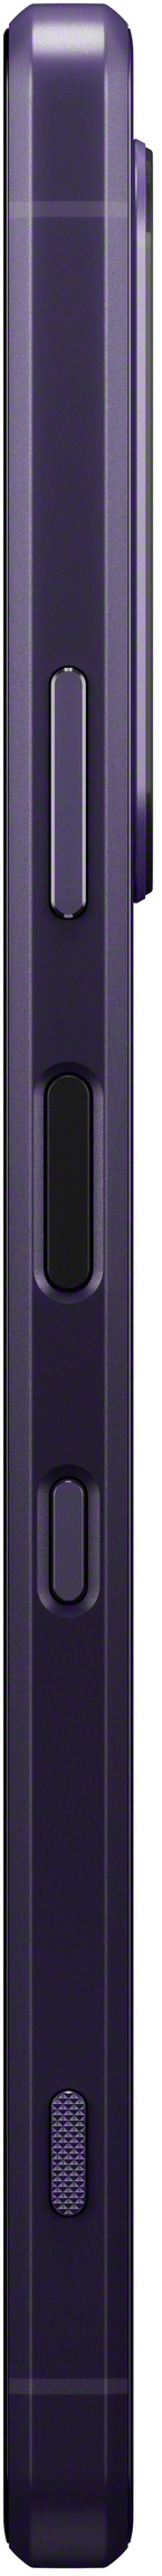 Sony XPERIA 1 III 256GB Dual-SIM Lila